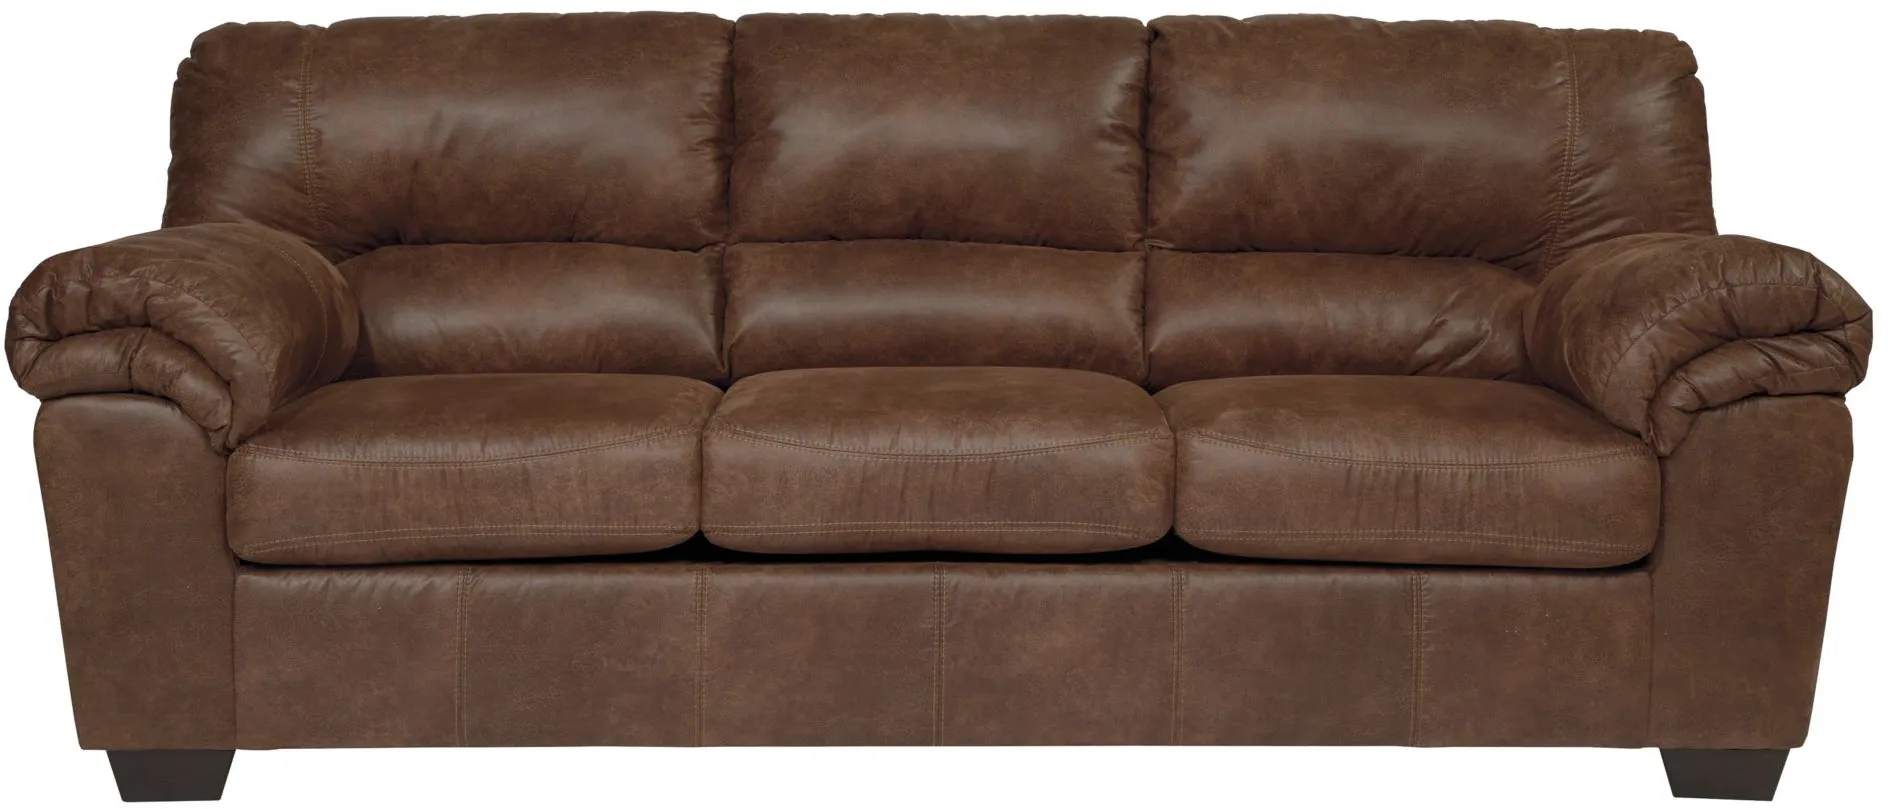 livingston leather-look sofa ashley